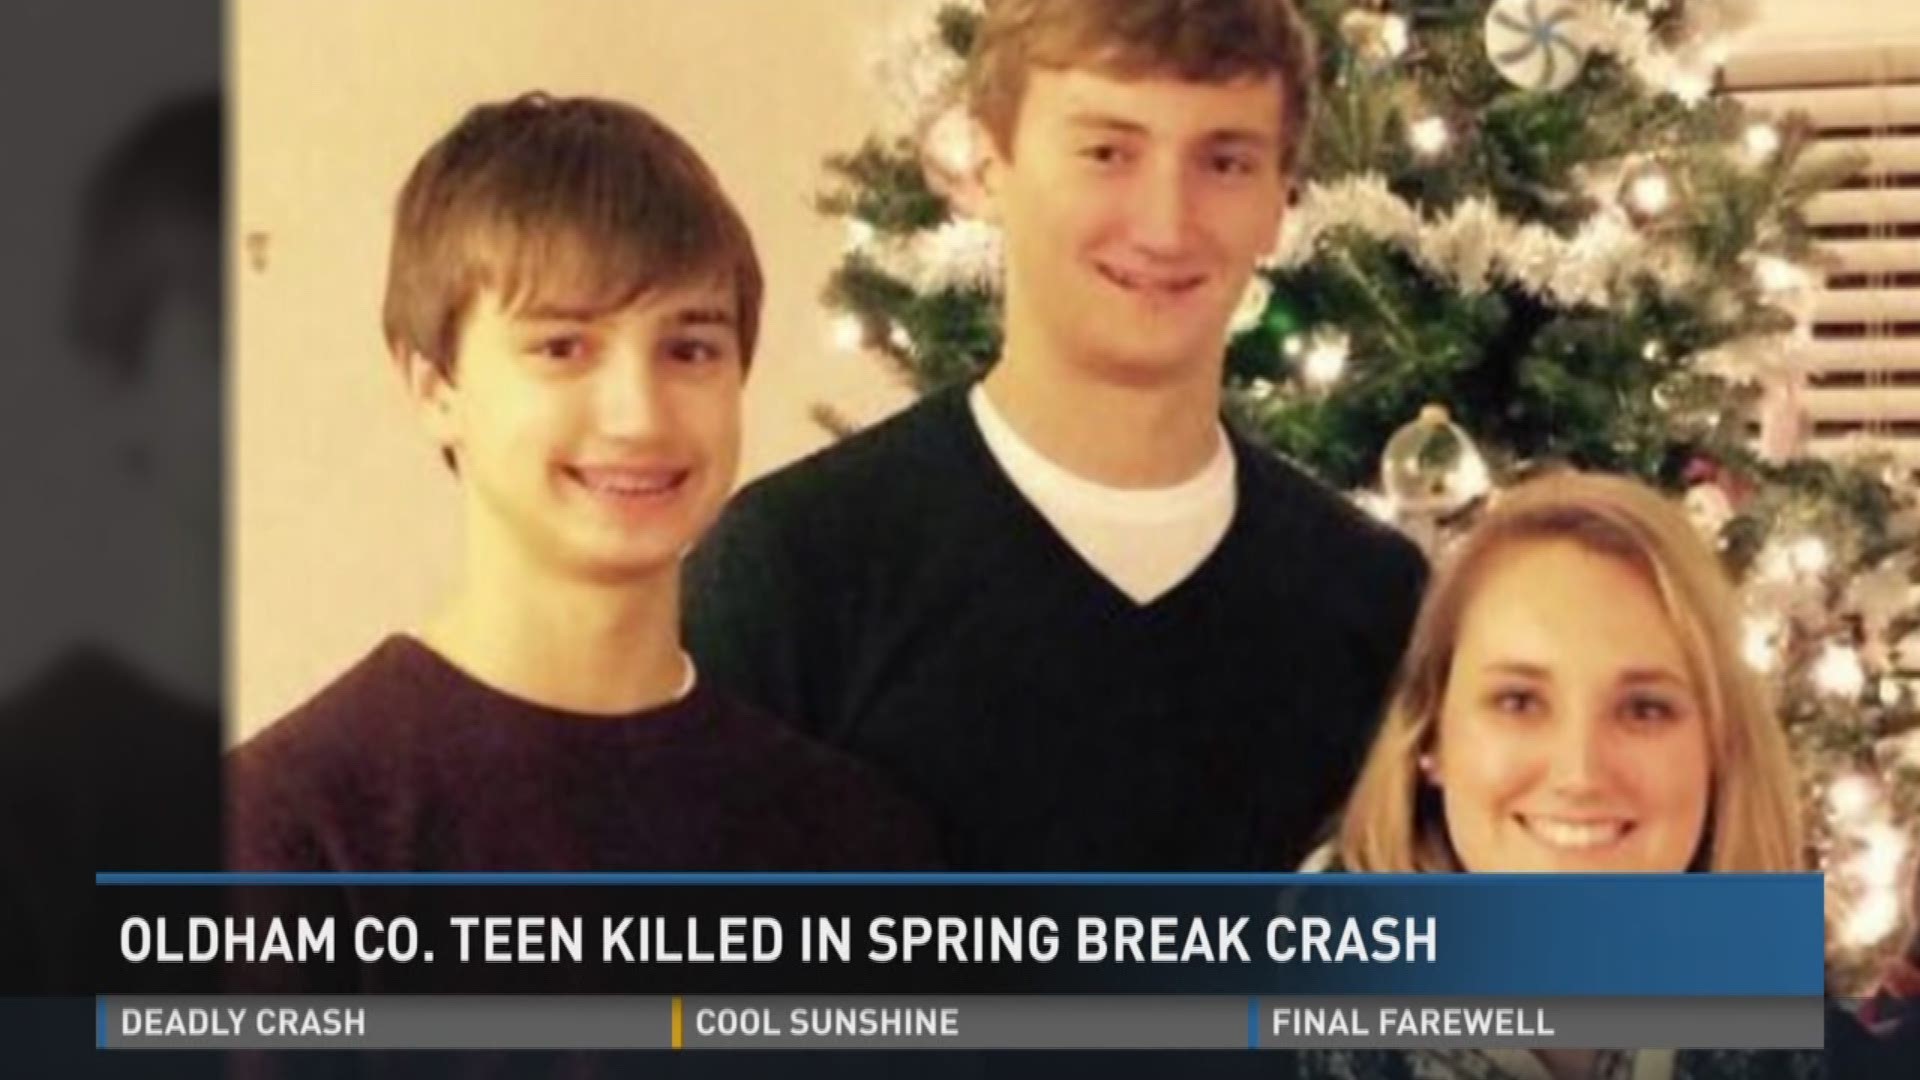 Oldham Co. teen killed in spring break crash